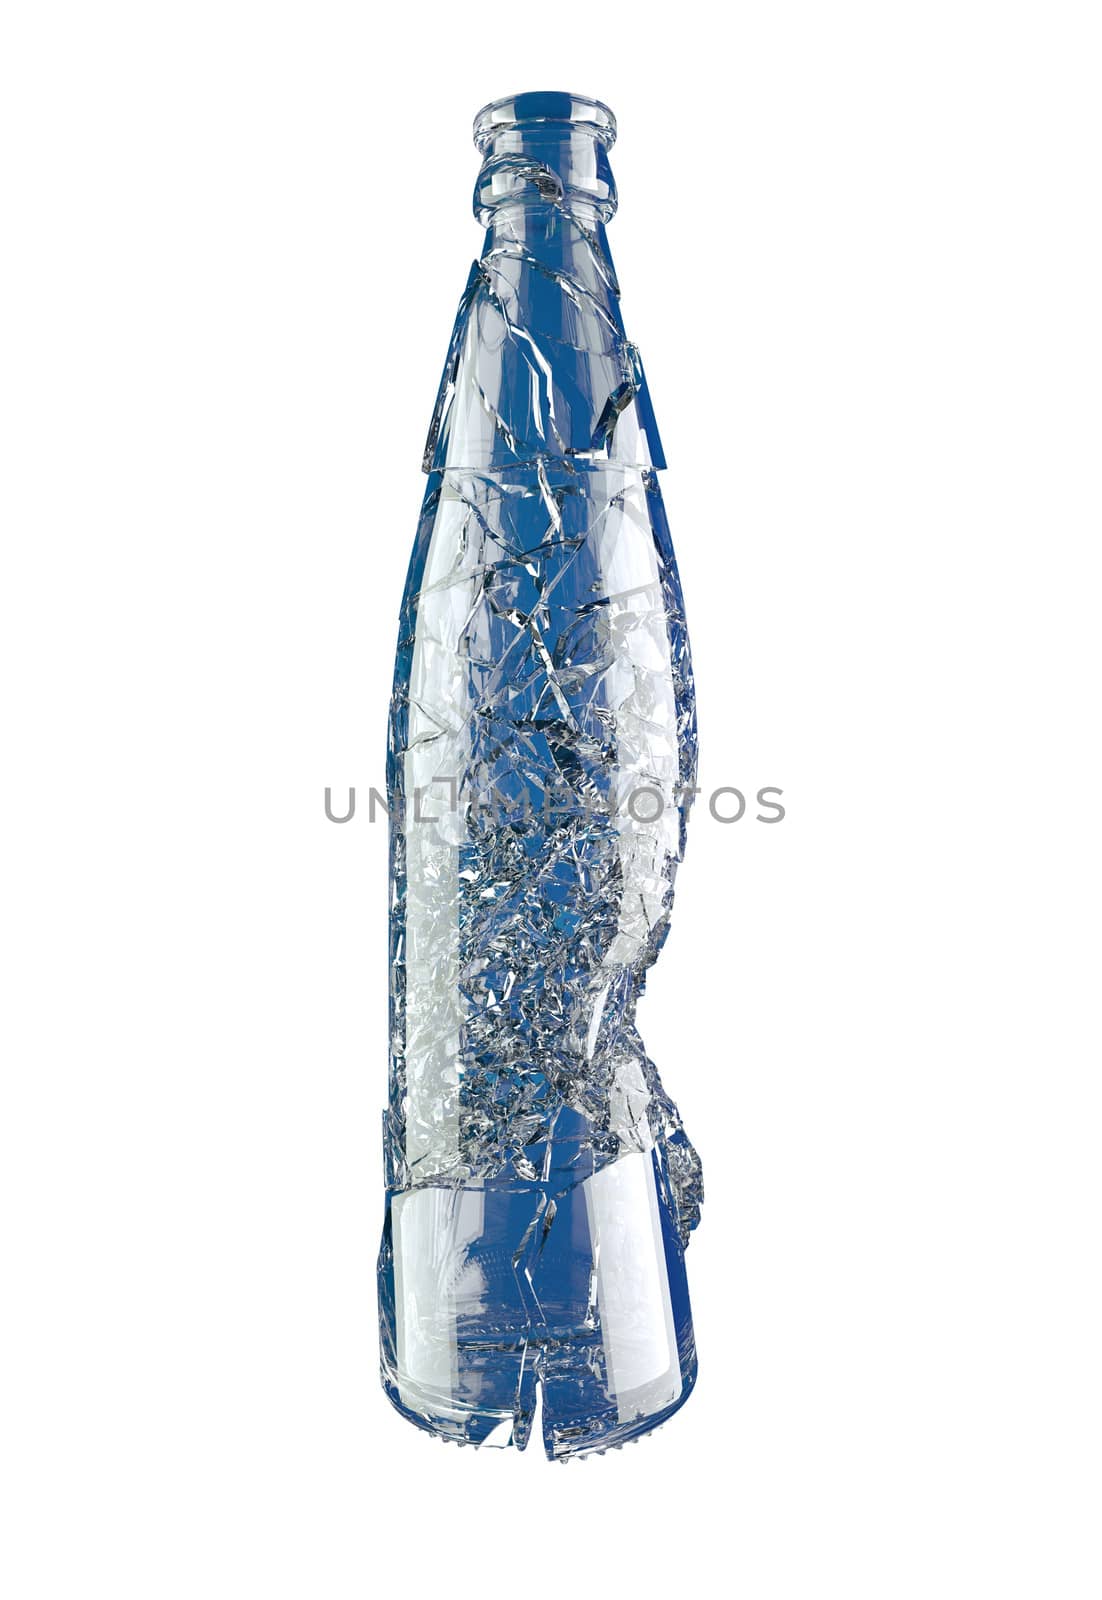 Shattered empty blue glass bottle isolated on white